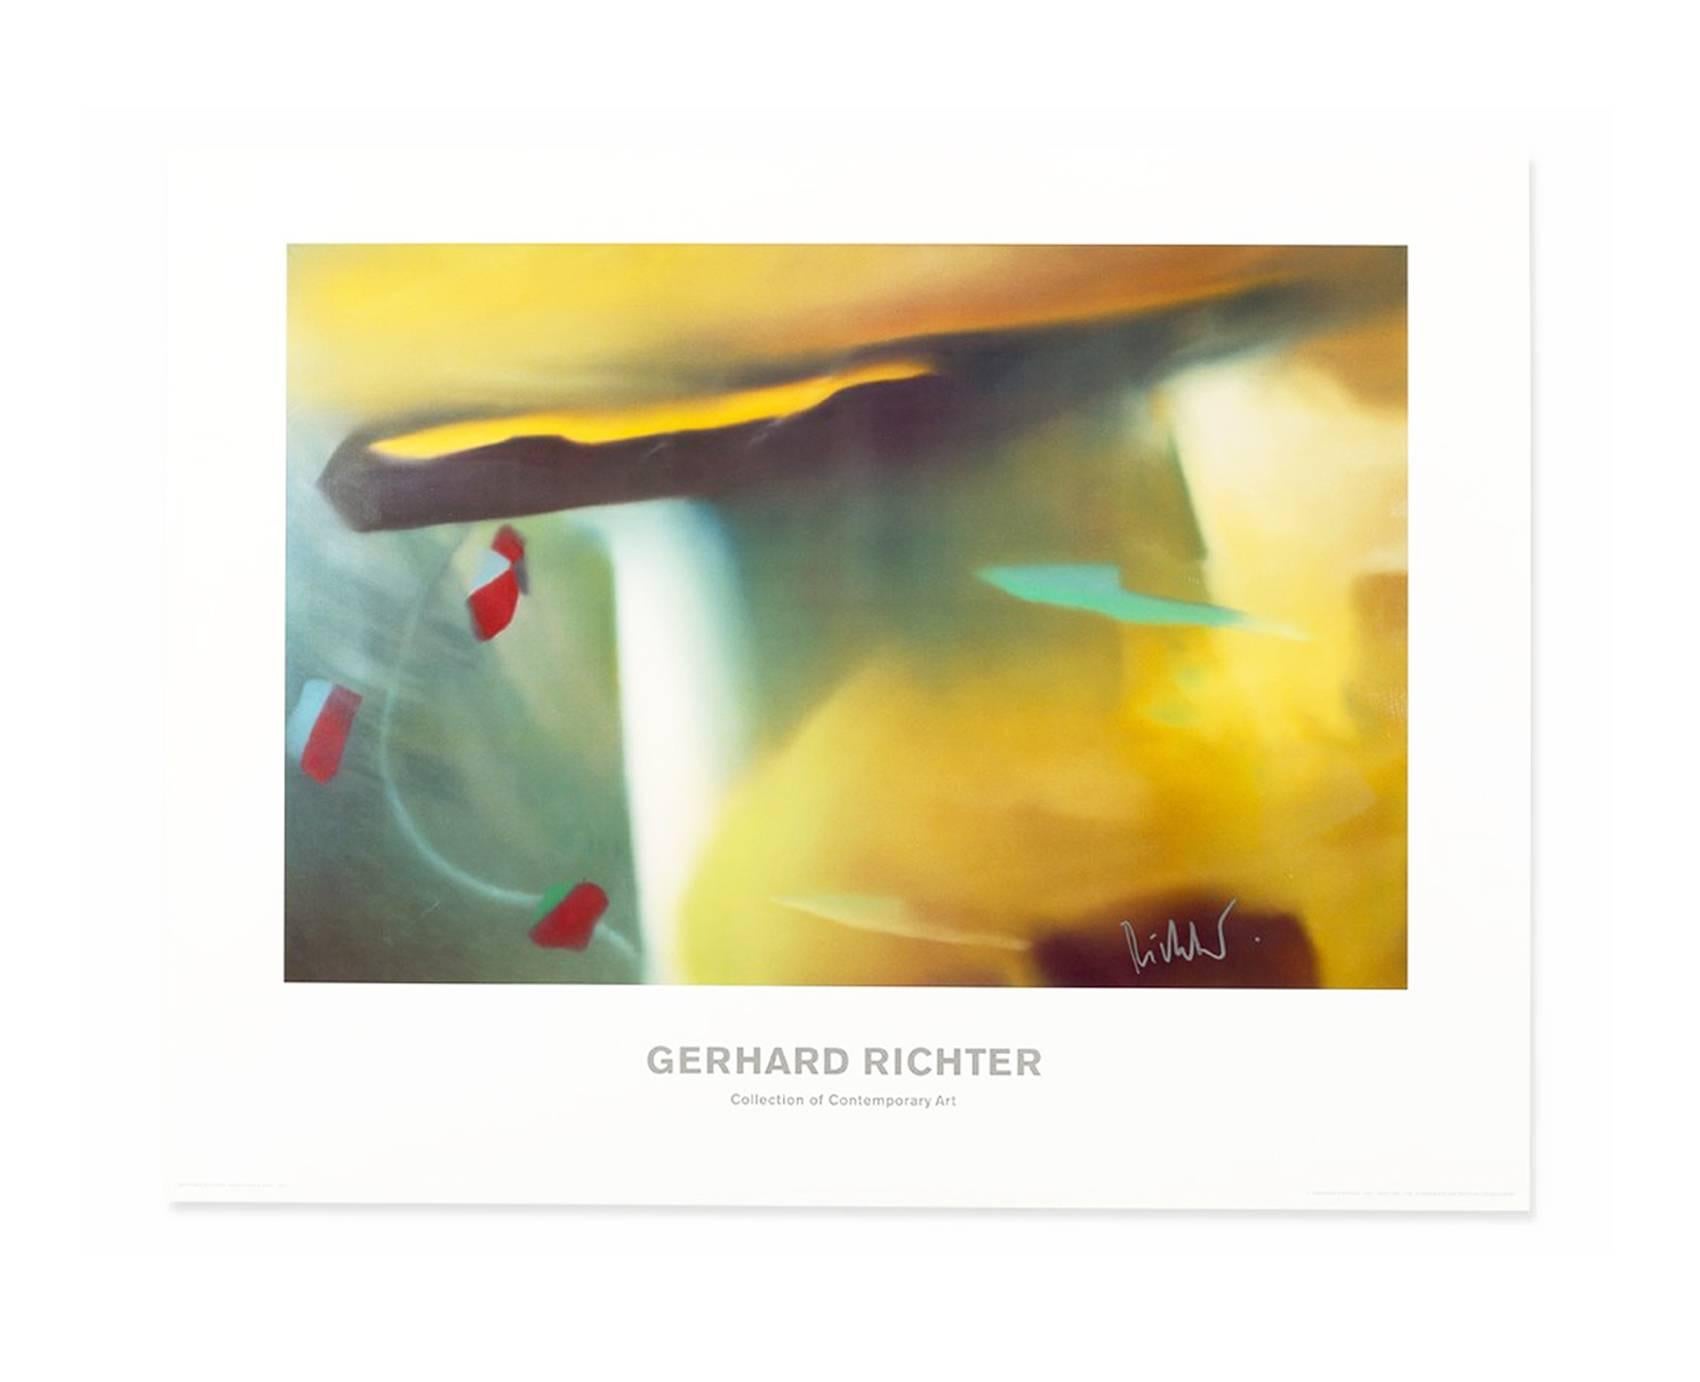 (after) Gerhard Richter Interior Print - Abstraktes Bild, Collection of Contemporary Art (poster), Hand signed, 1991